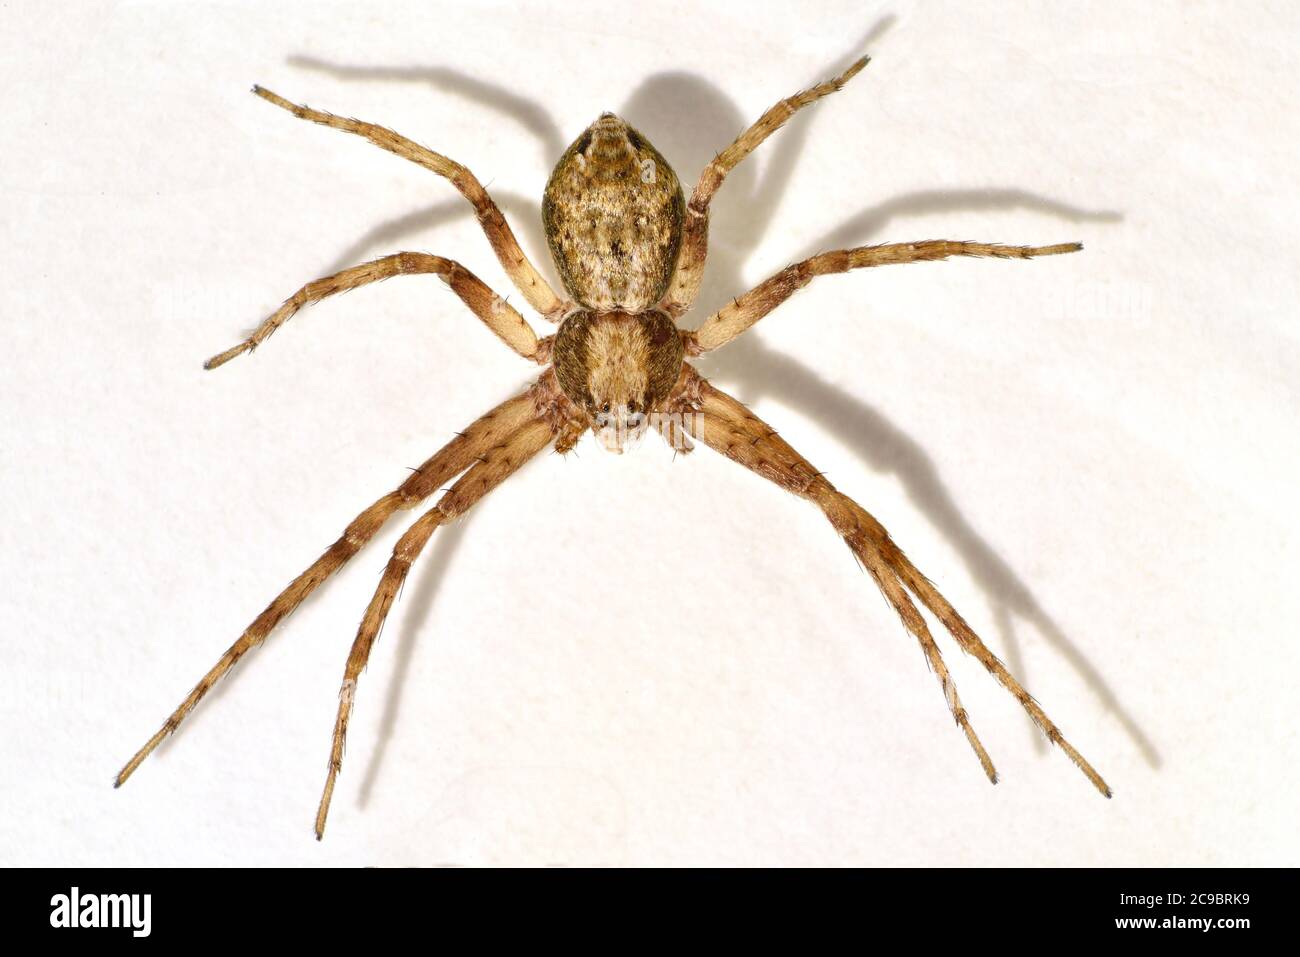 Running spider, Philodromus caureolus, female. UK, dorsal view Stock Photo